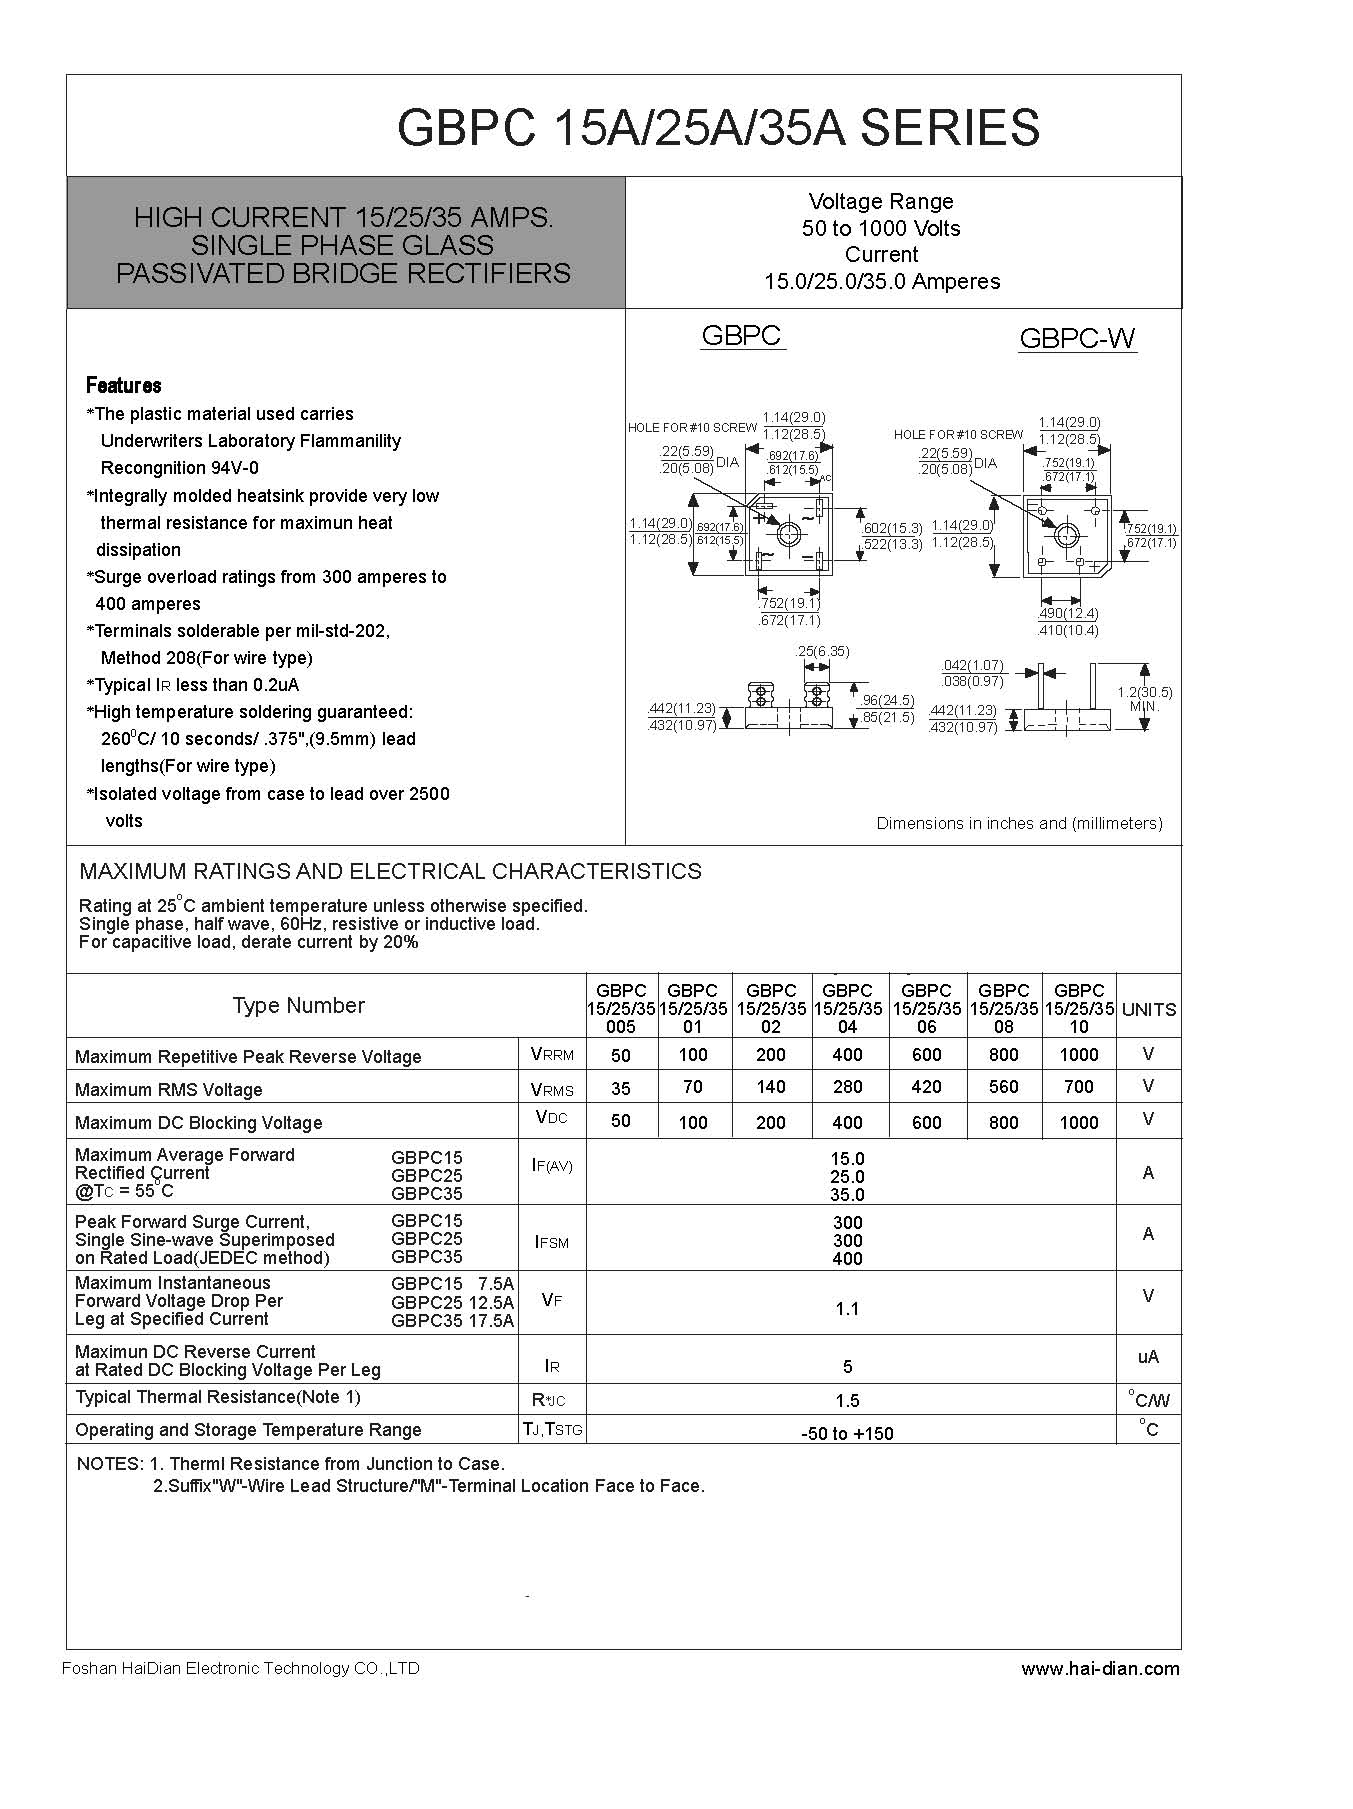 GBPC2508桥式整流器(整流桥堆)-- 佛山海电电子科技有限公司